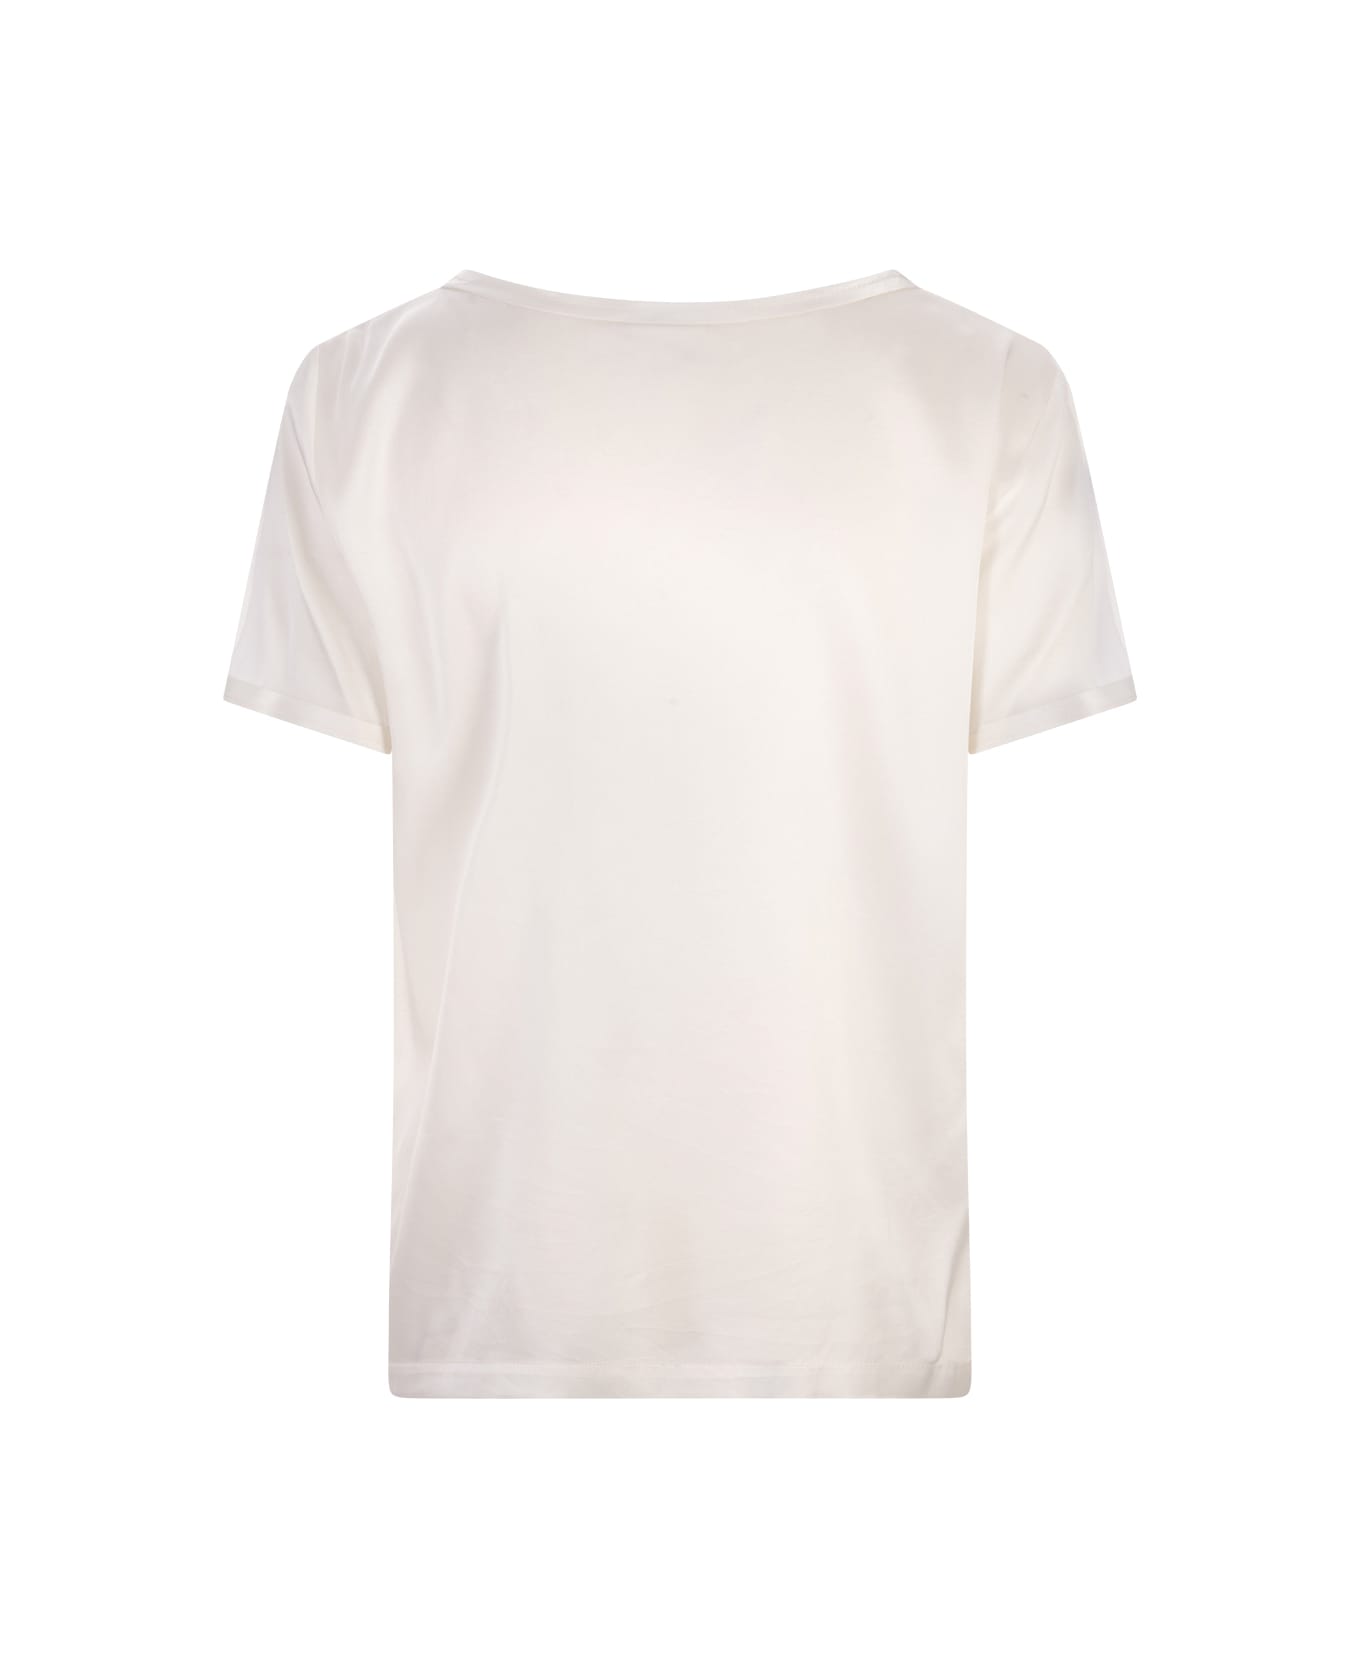 Her Shirt White Silk T-shirt - White